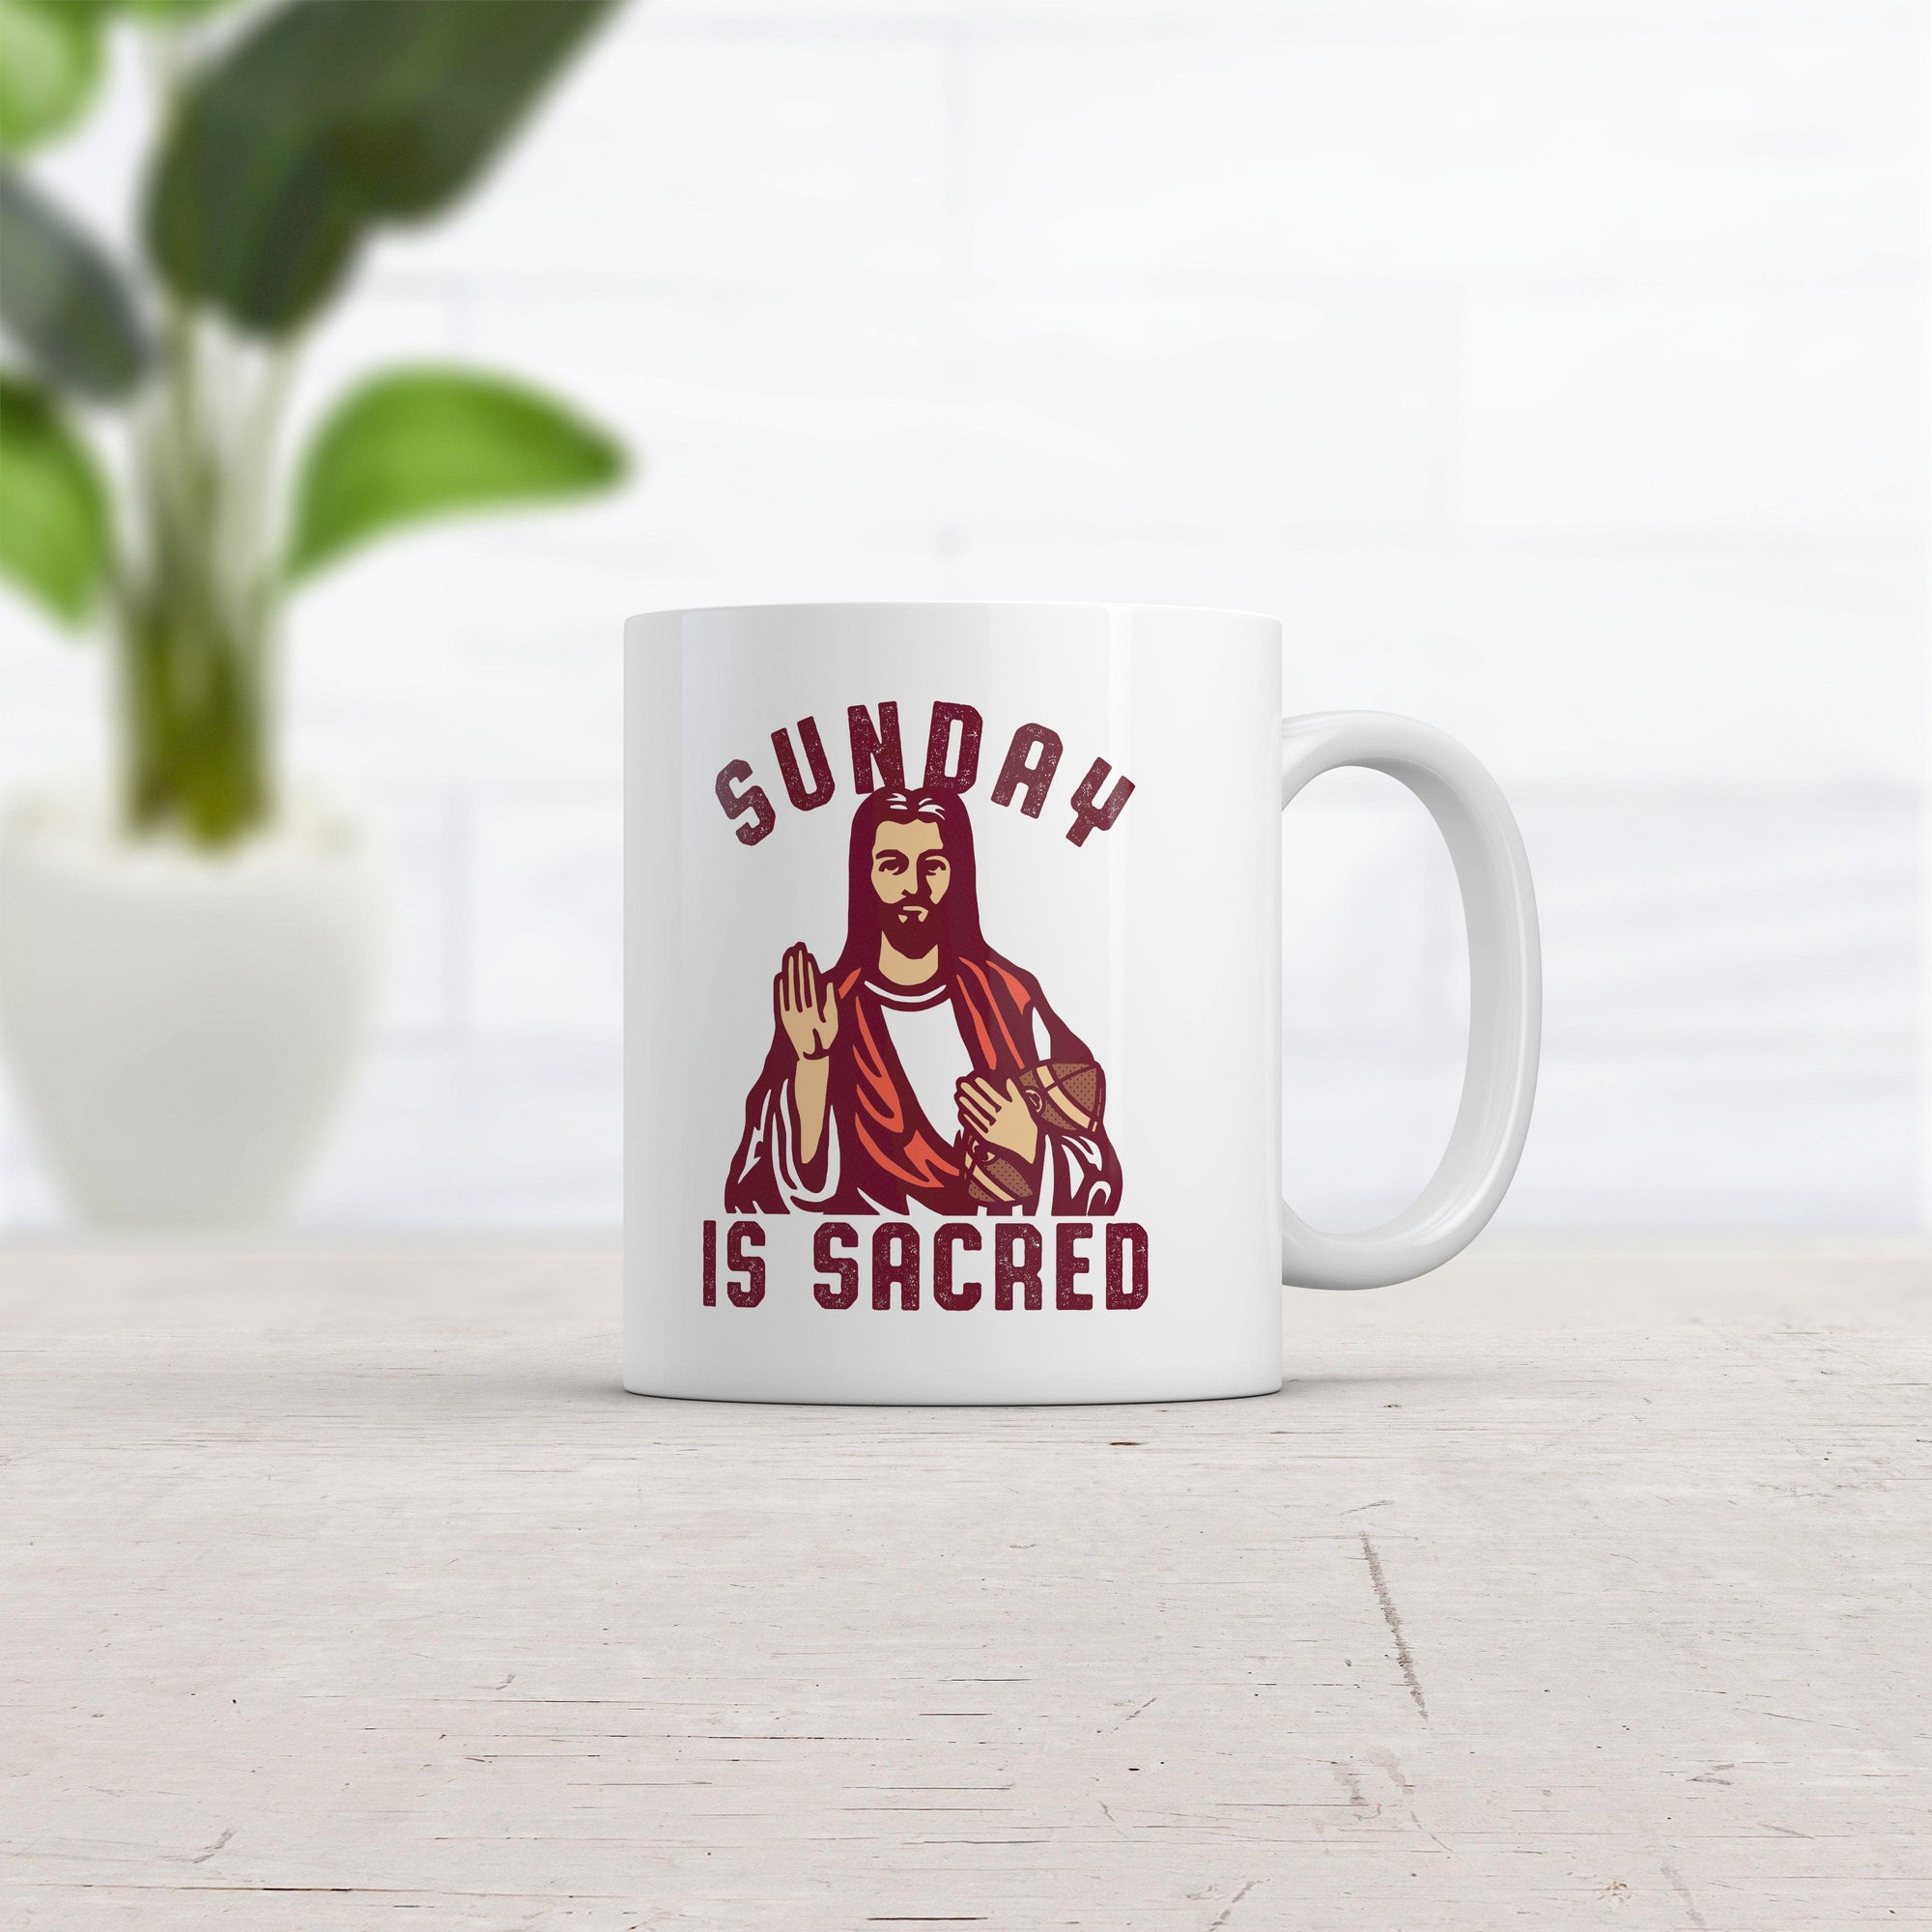 Sunday Is Sacred Mug Funny Football Jesus Graphic Novelty Coffee Cup -11oz  -  Crazy Dog T-Shirts